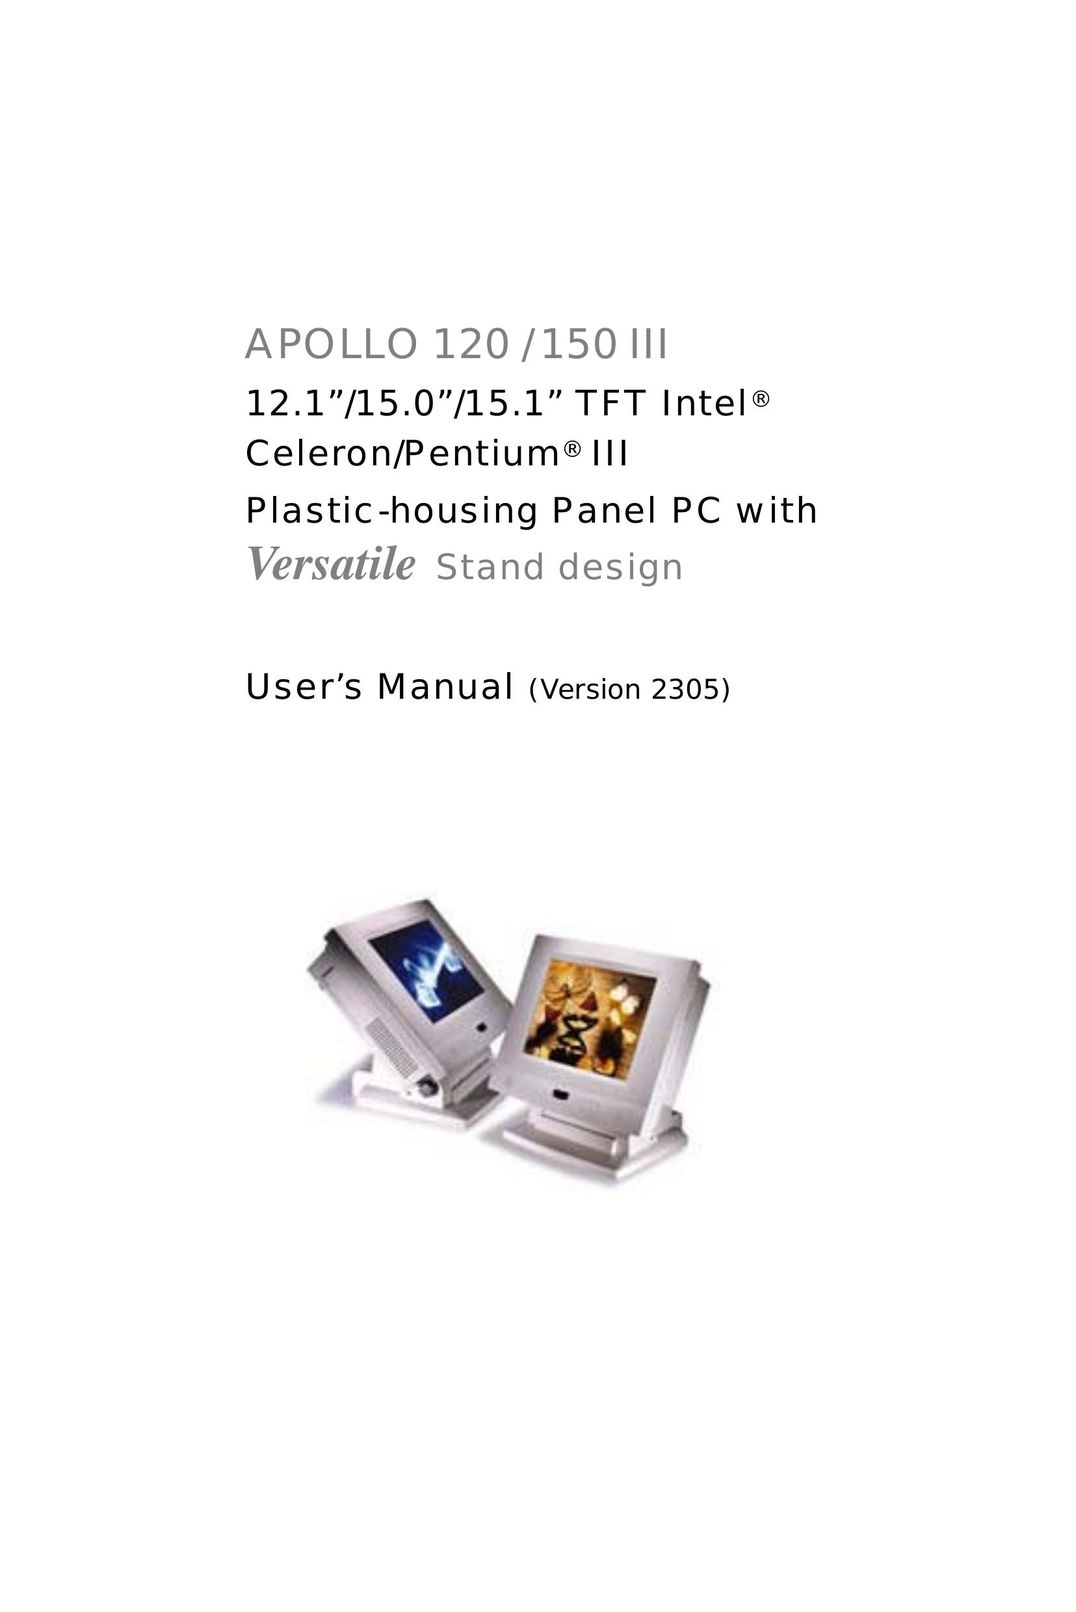 Apollo 120 III Personal Computer User Manual